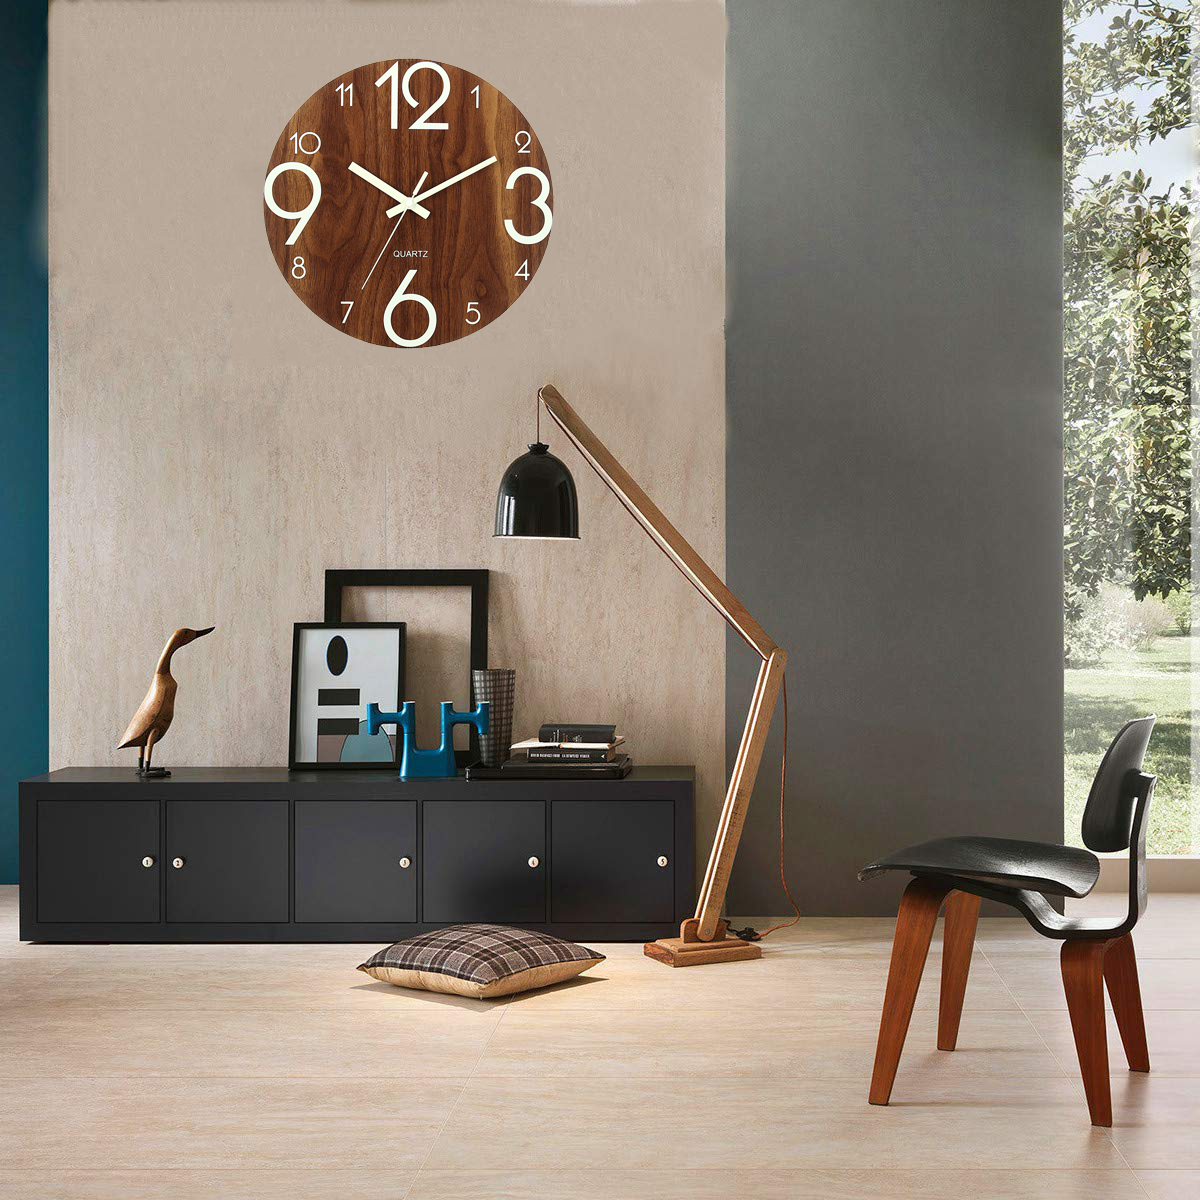 12quot-Luminous-Wall-Clock-Quartz-Wooden-Silent-Non-Ticking-Dark-Home-Room-Decor-1496359-3